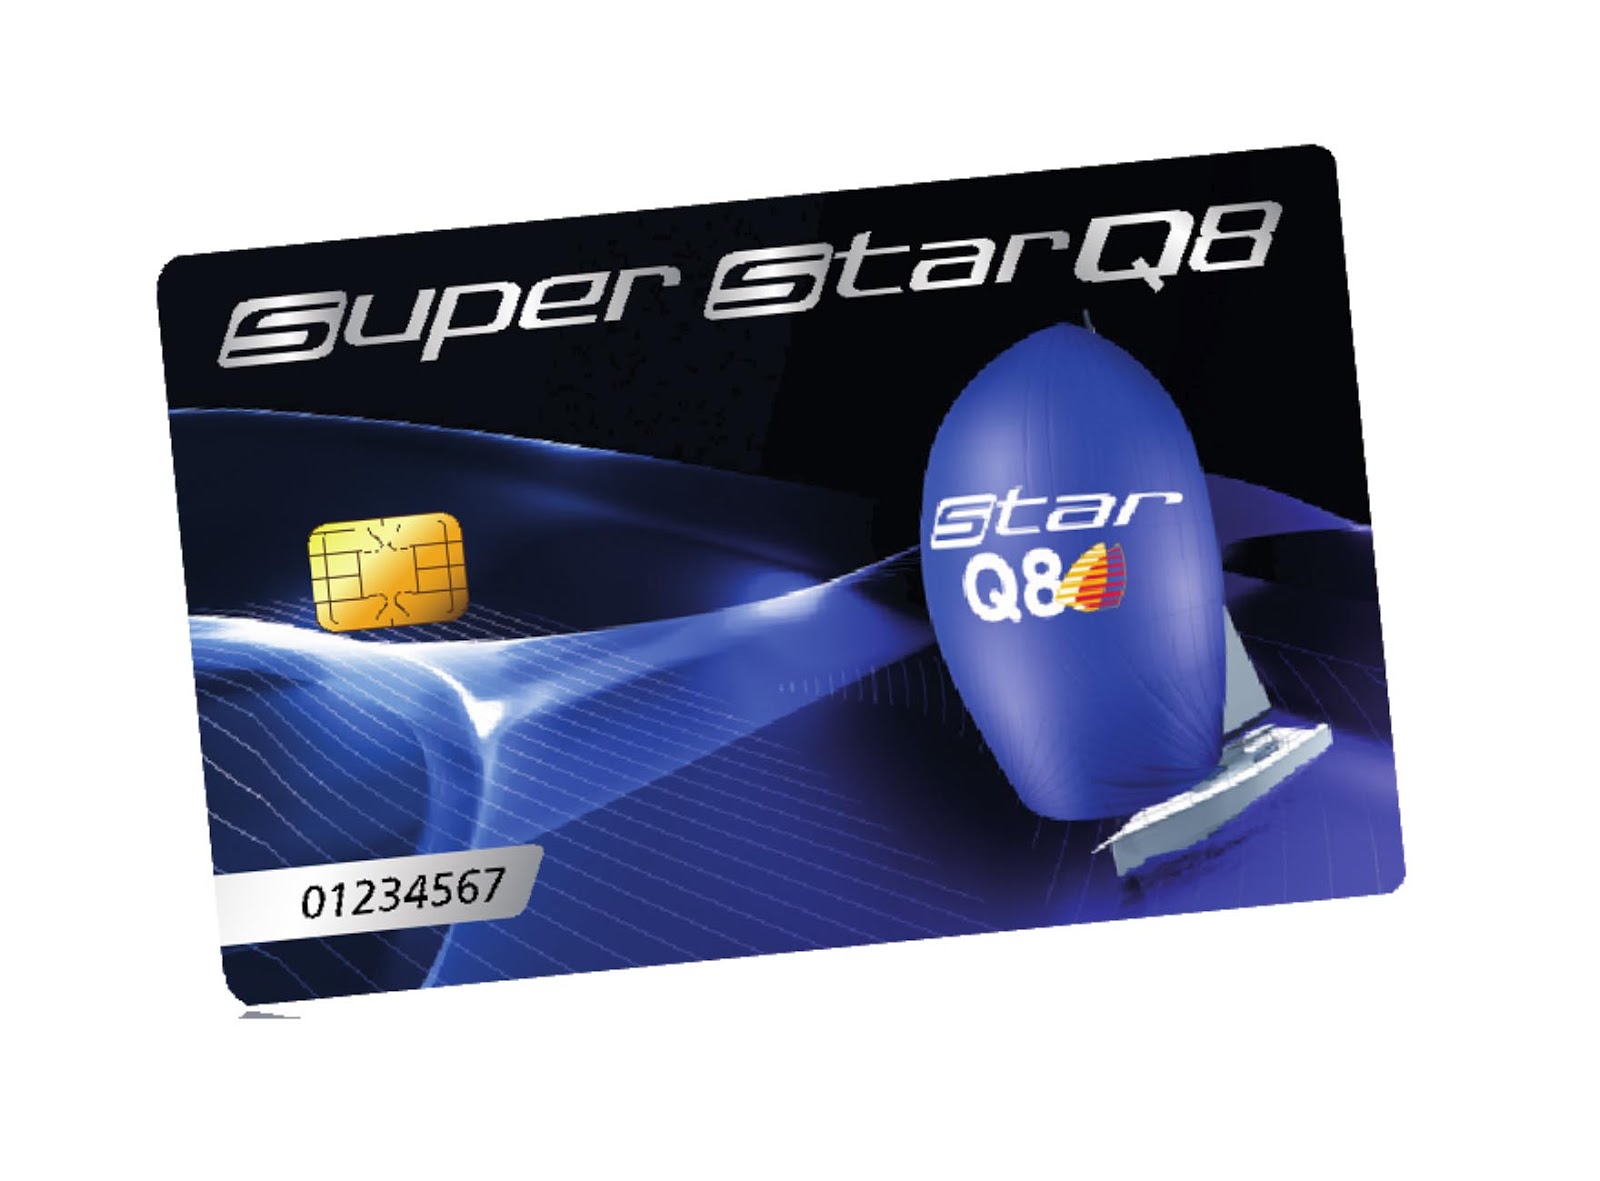 superstarq8 premi